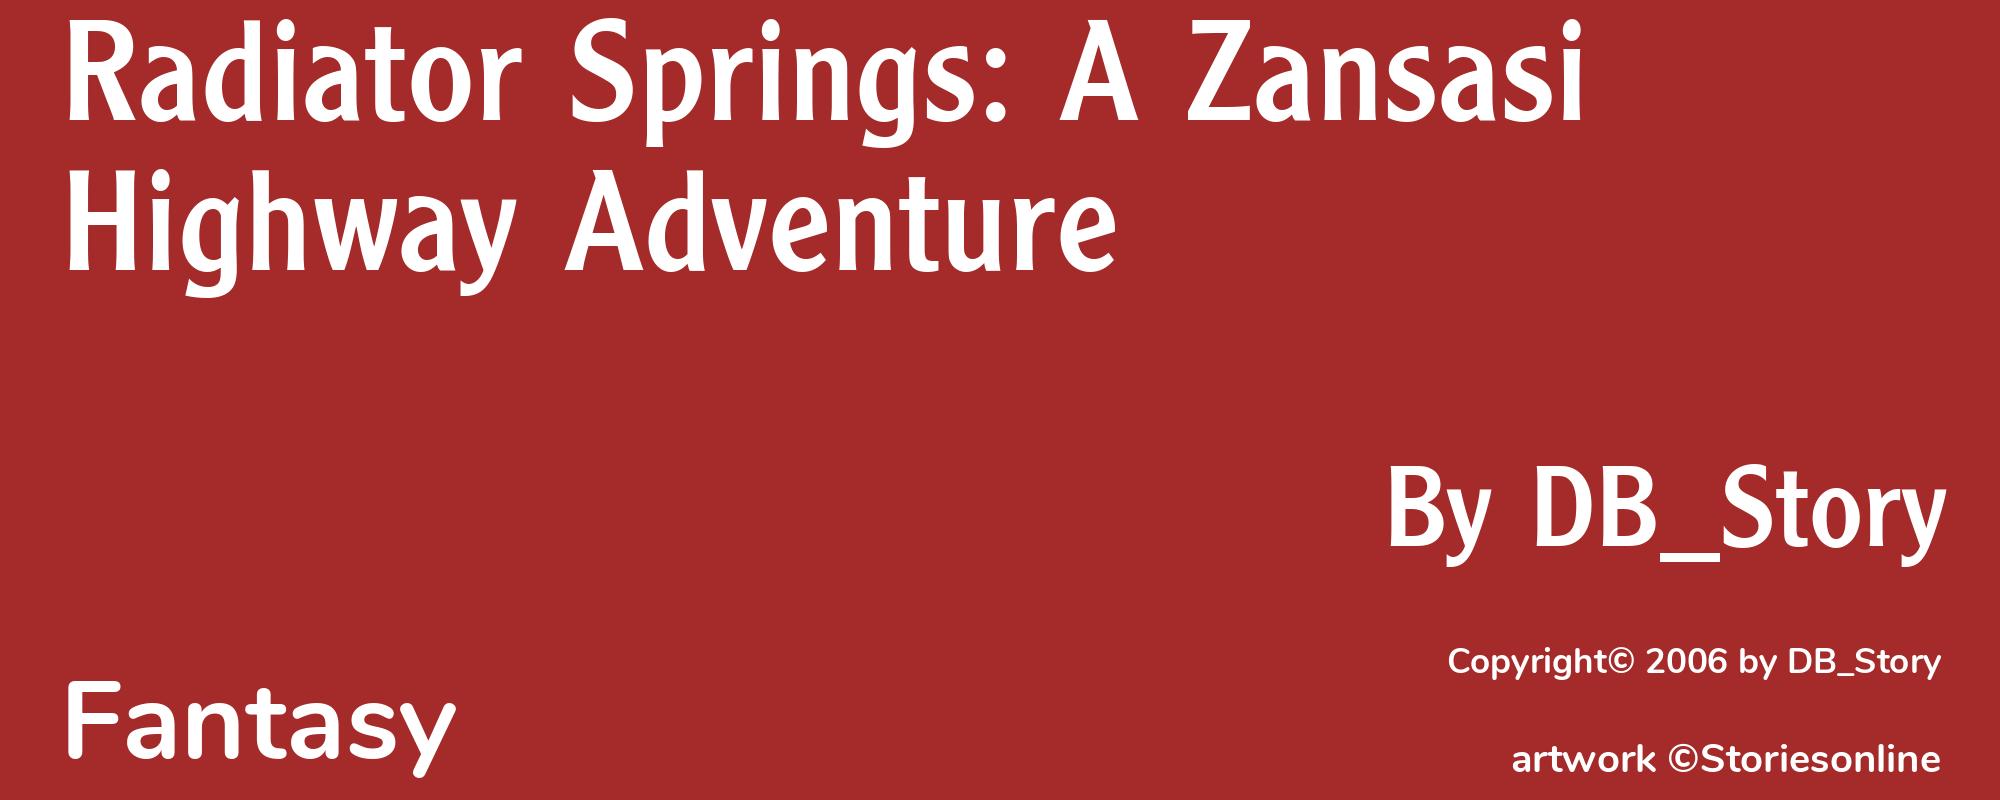 Radiator Springs: A Zansasi Highway Adventure - Cover